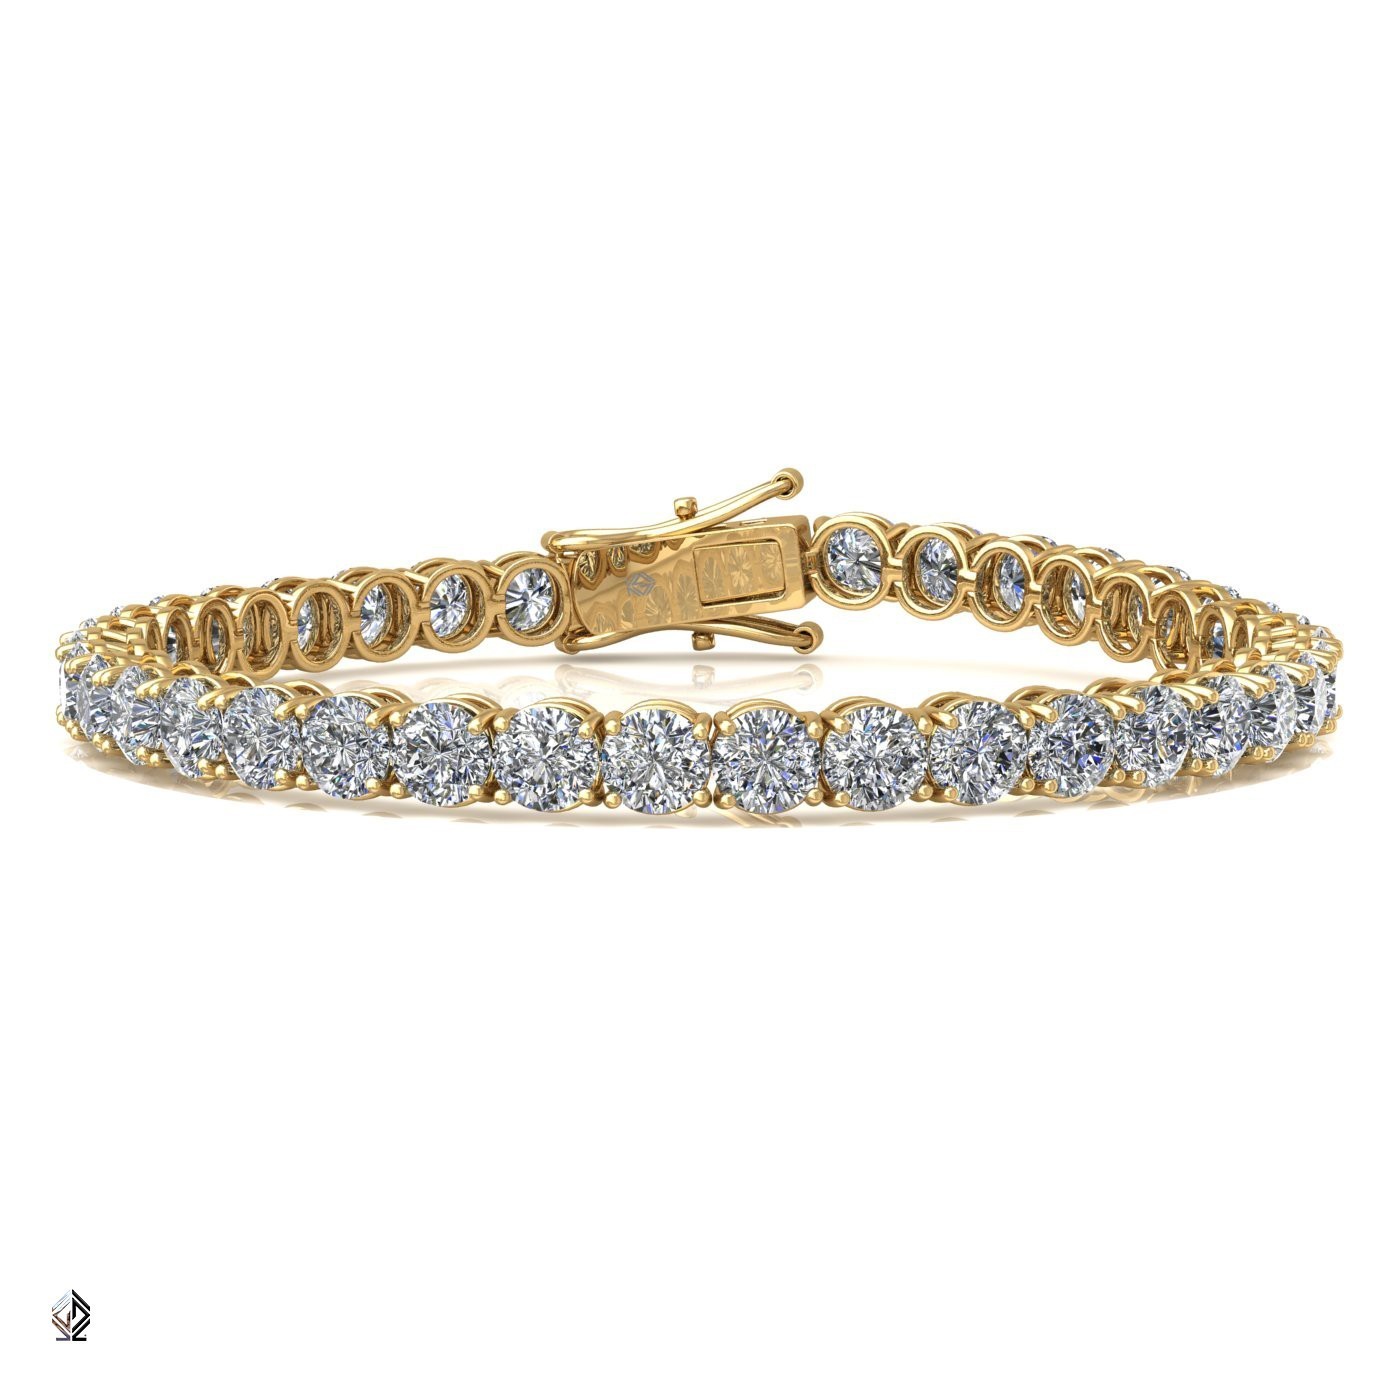 18k yellow gold 3.8mm 4 prong round shape diamond tennis bracelet in round setting